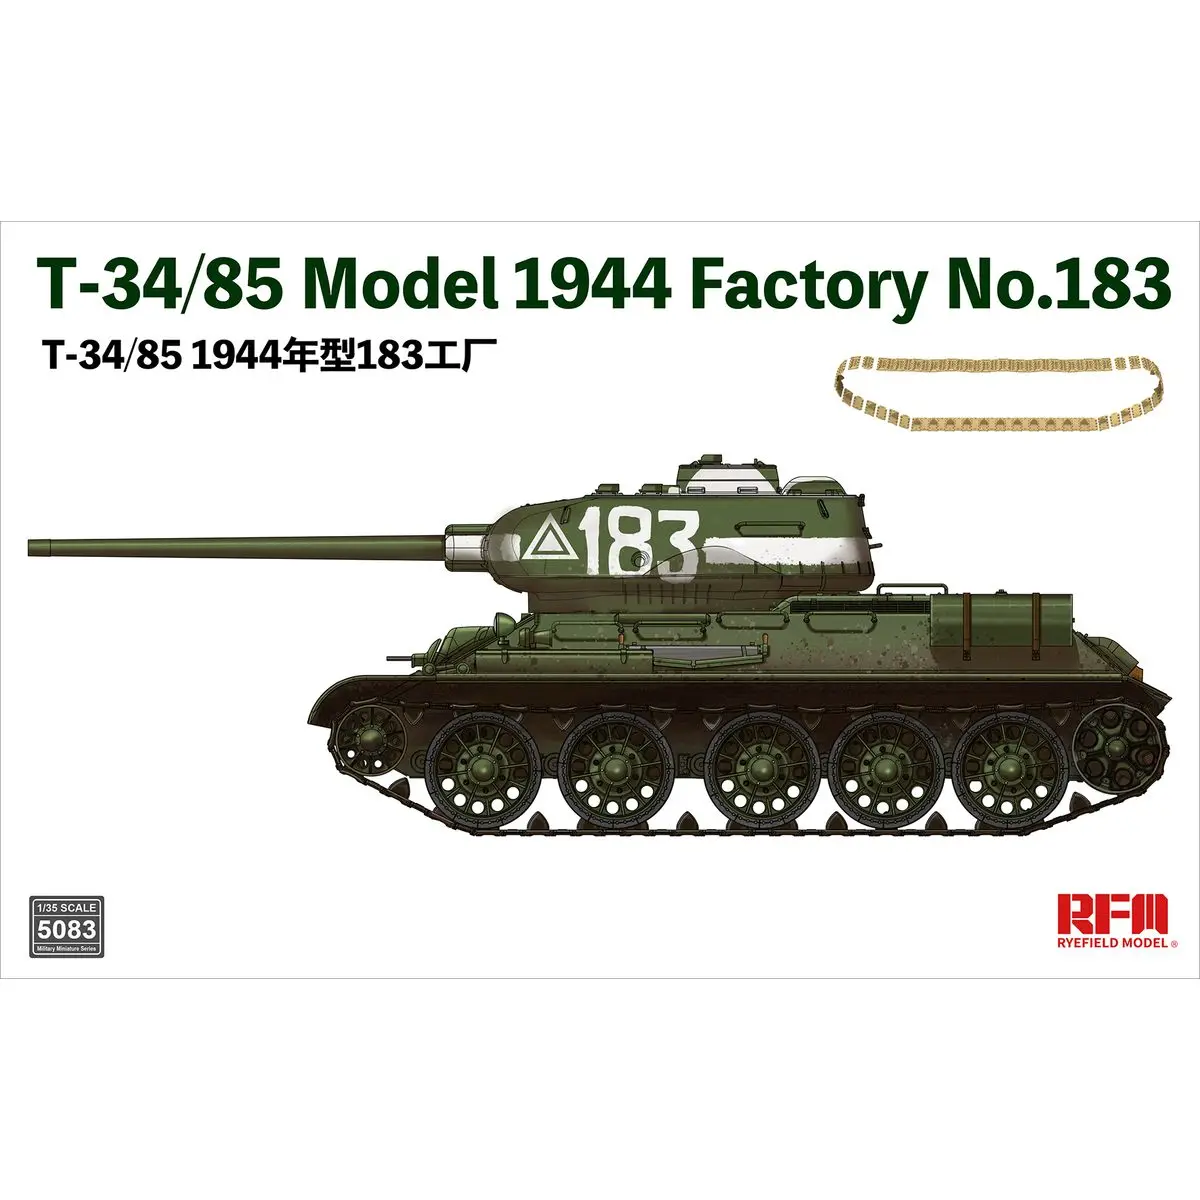 

RYEFIELD MODEL RFM RM-5083 1/35 T-34/85 Model 1944 Factory No.183 - Scale Model Kit